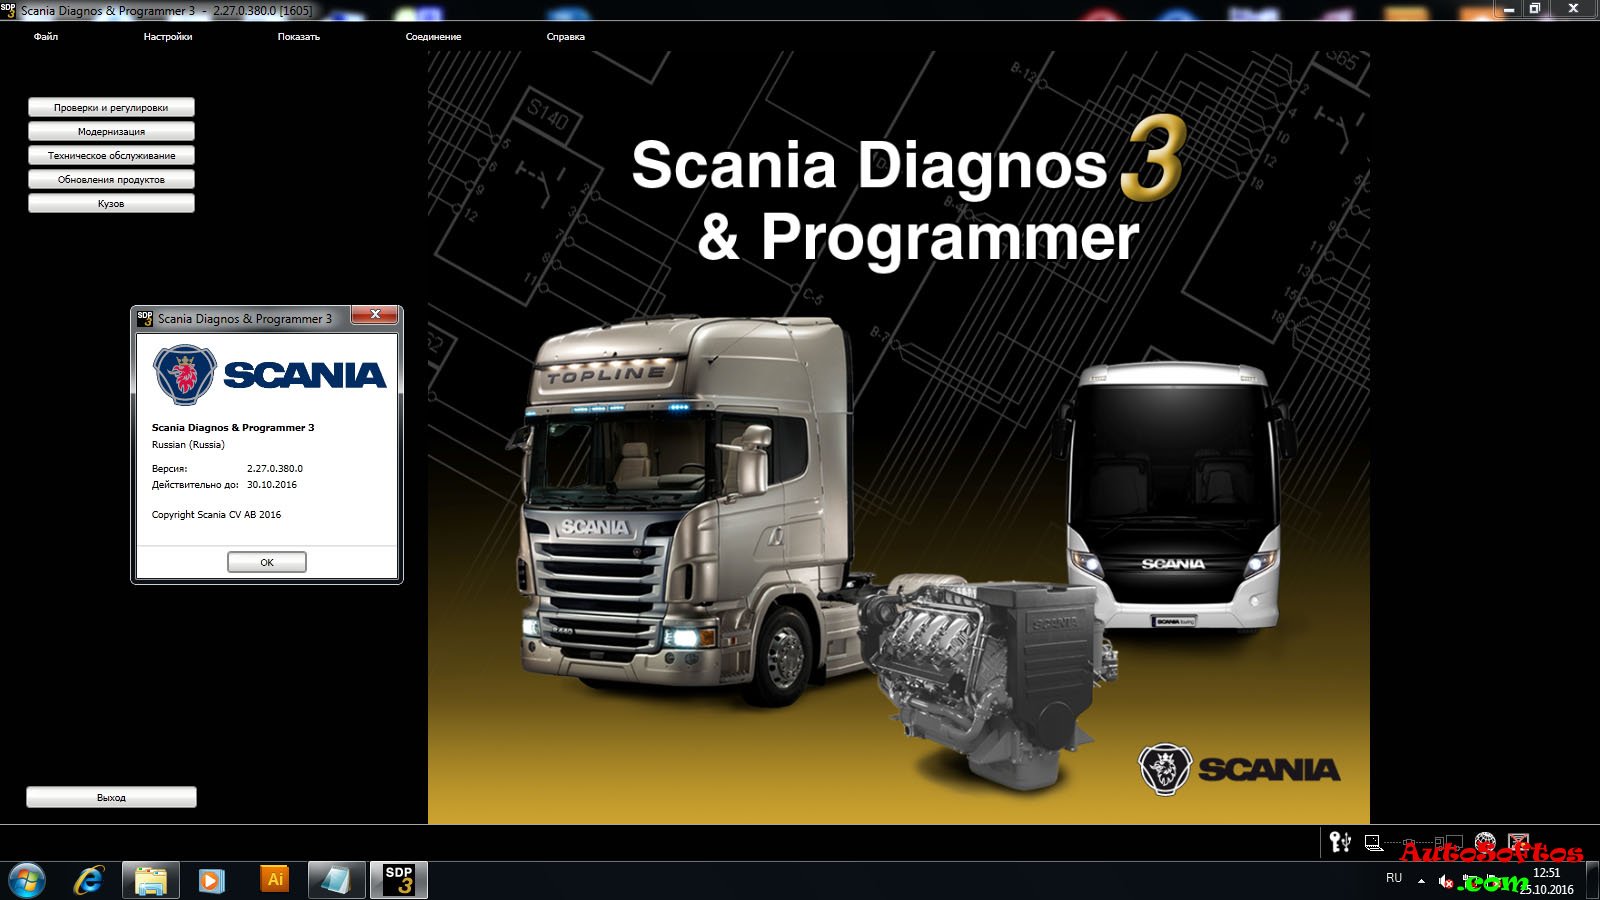 Scania Diagnos & Programmer